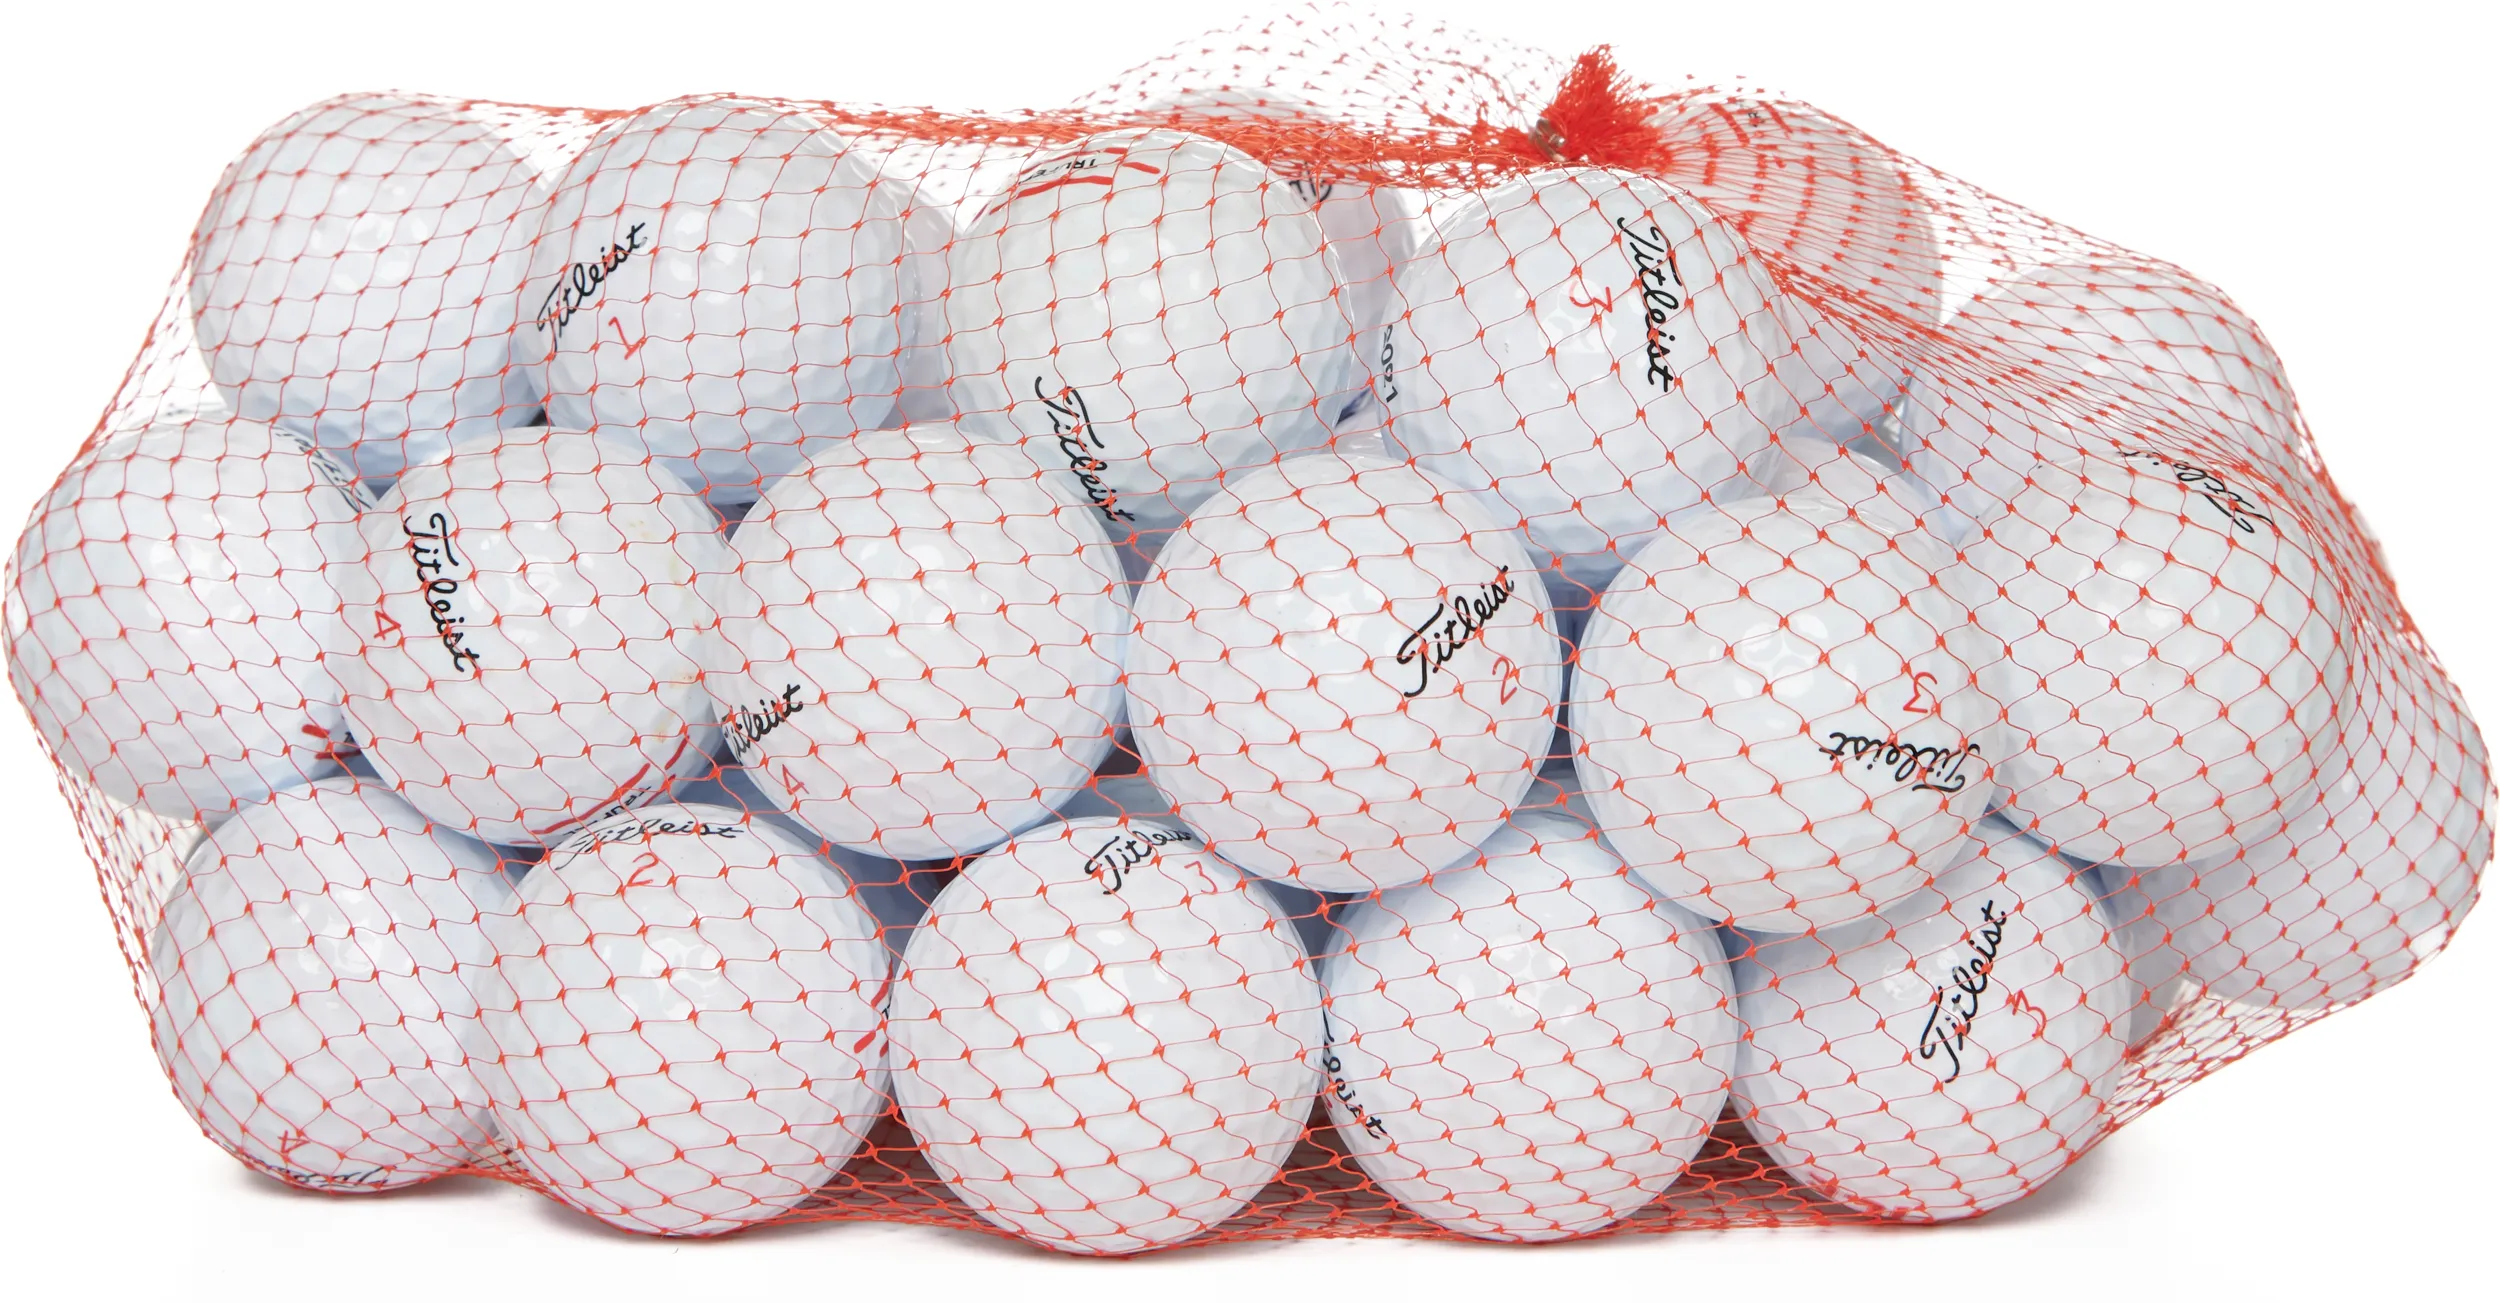 50 Titleist TruFeel Lakeballs, White